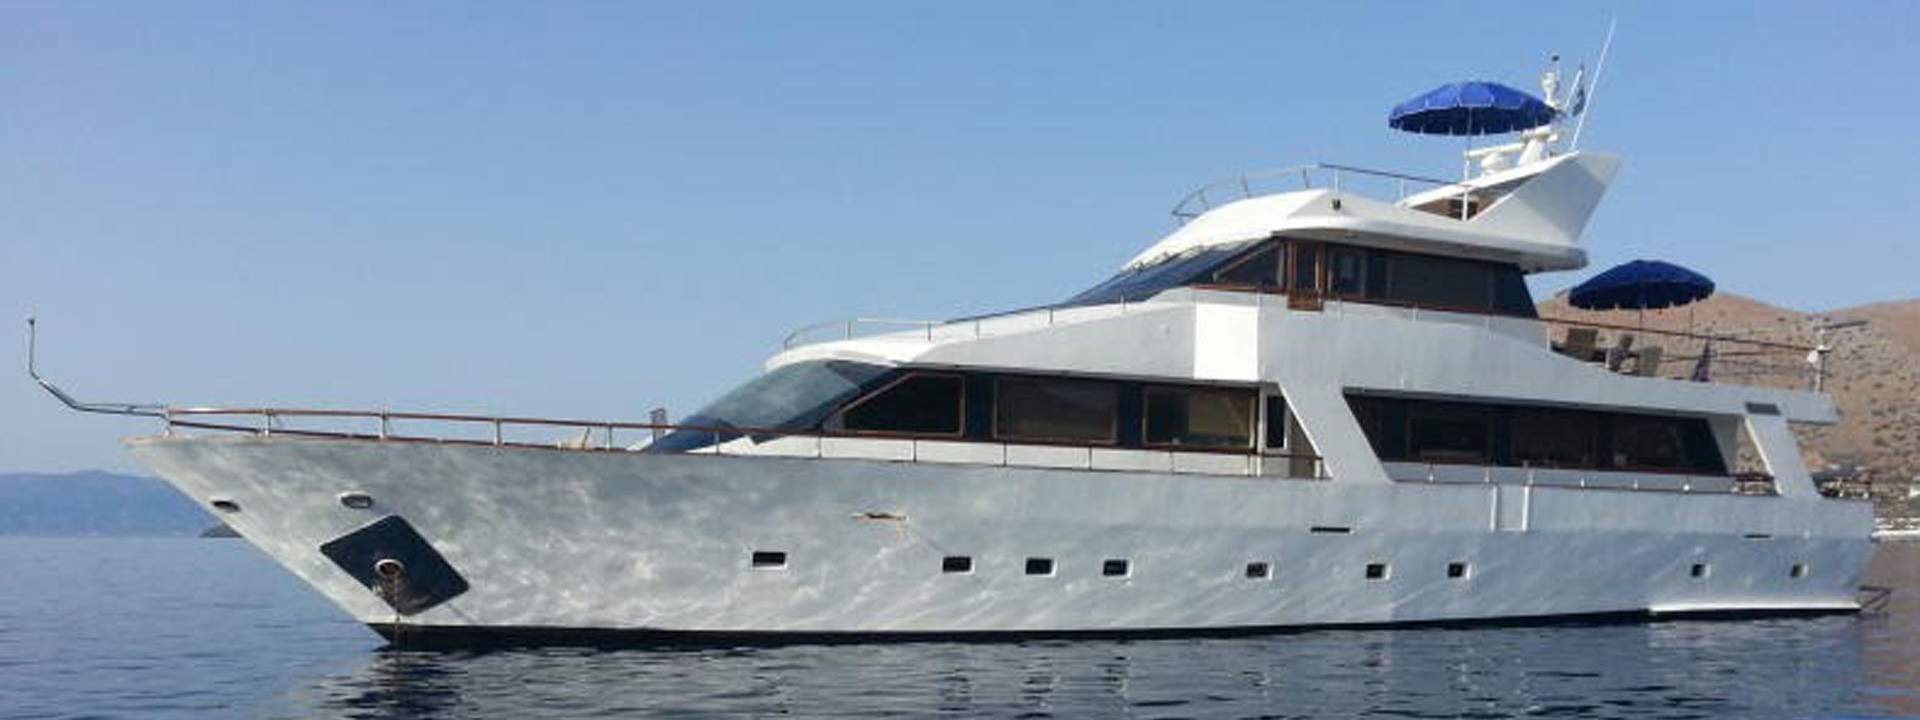 Luxury Yacht Torgem 92